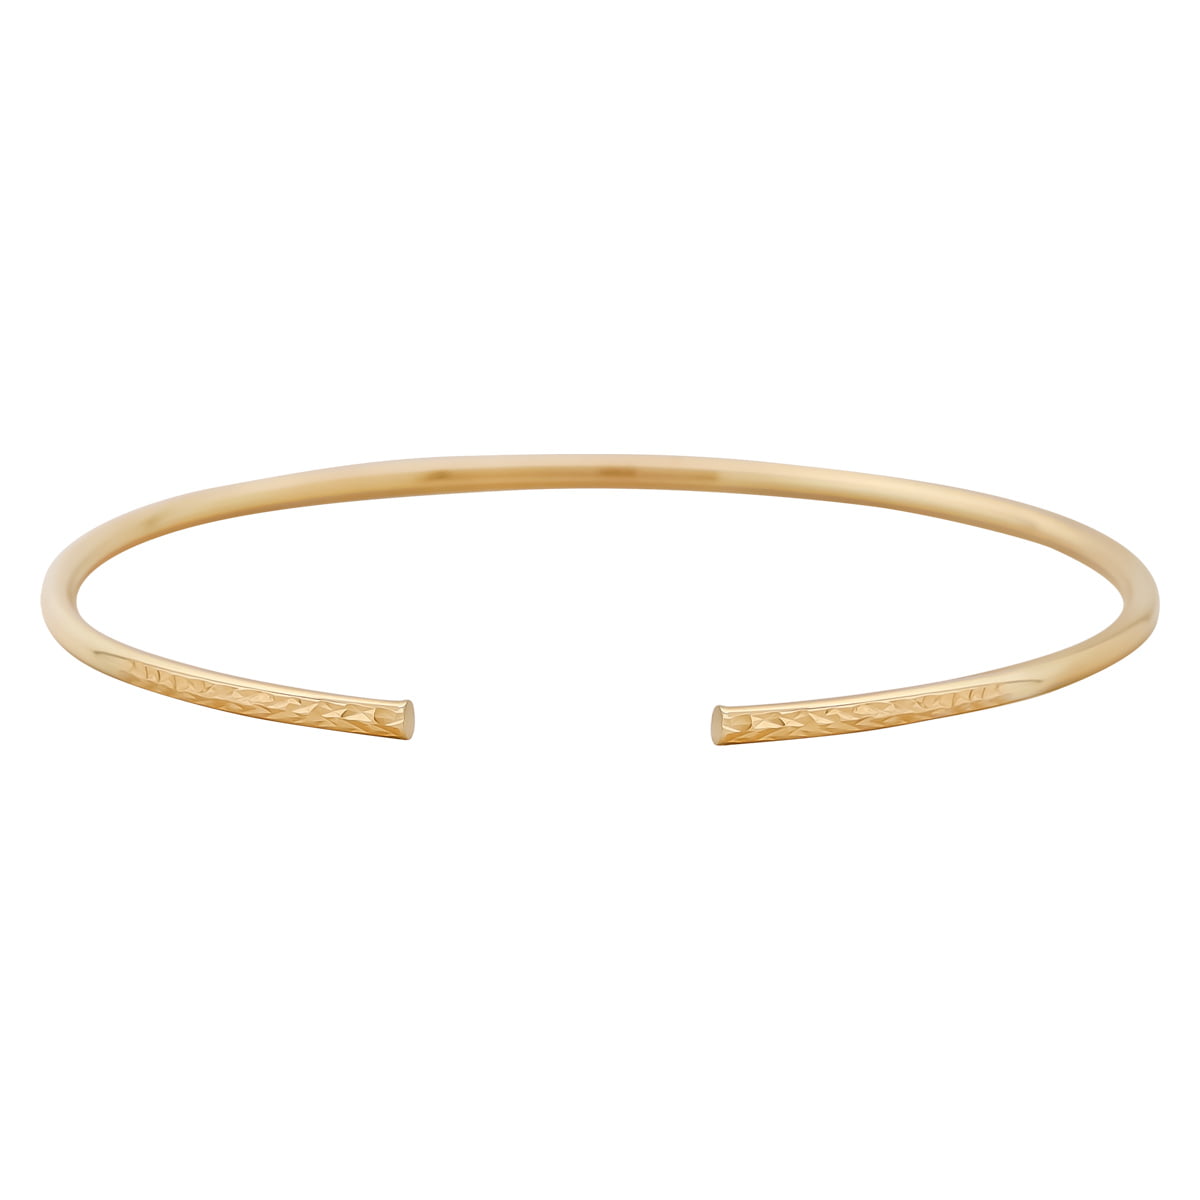 Macys Solid Gold Polished Bangle Bracelet in 14k Gold  Macys